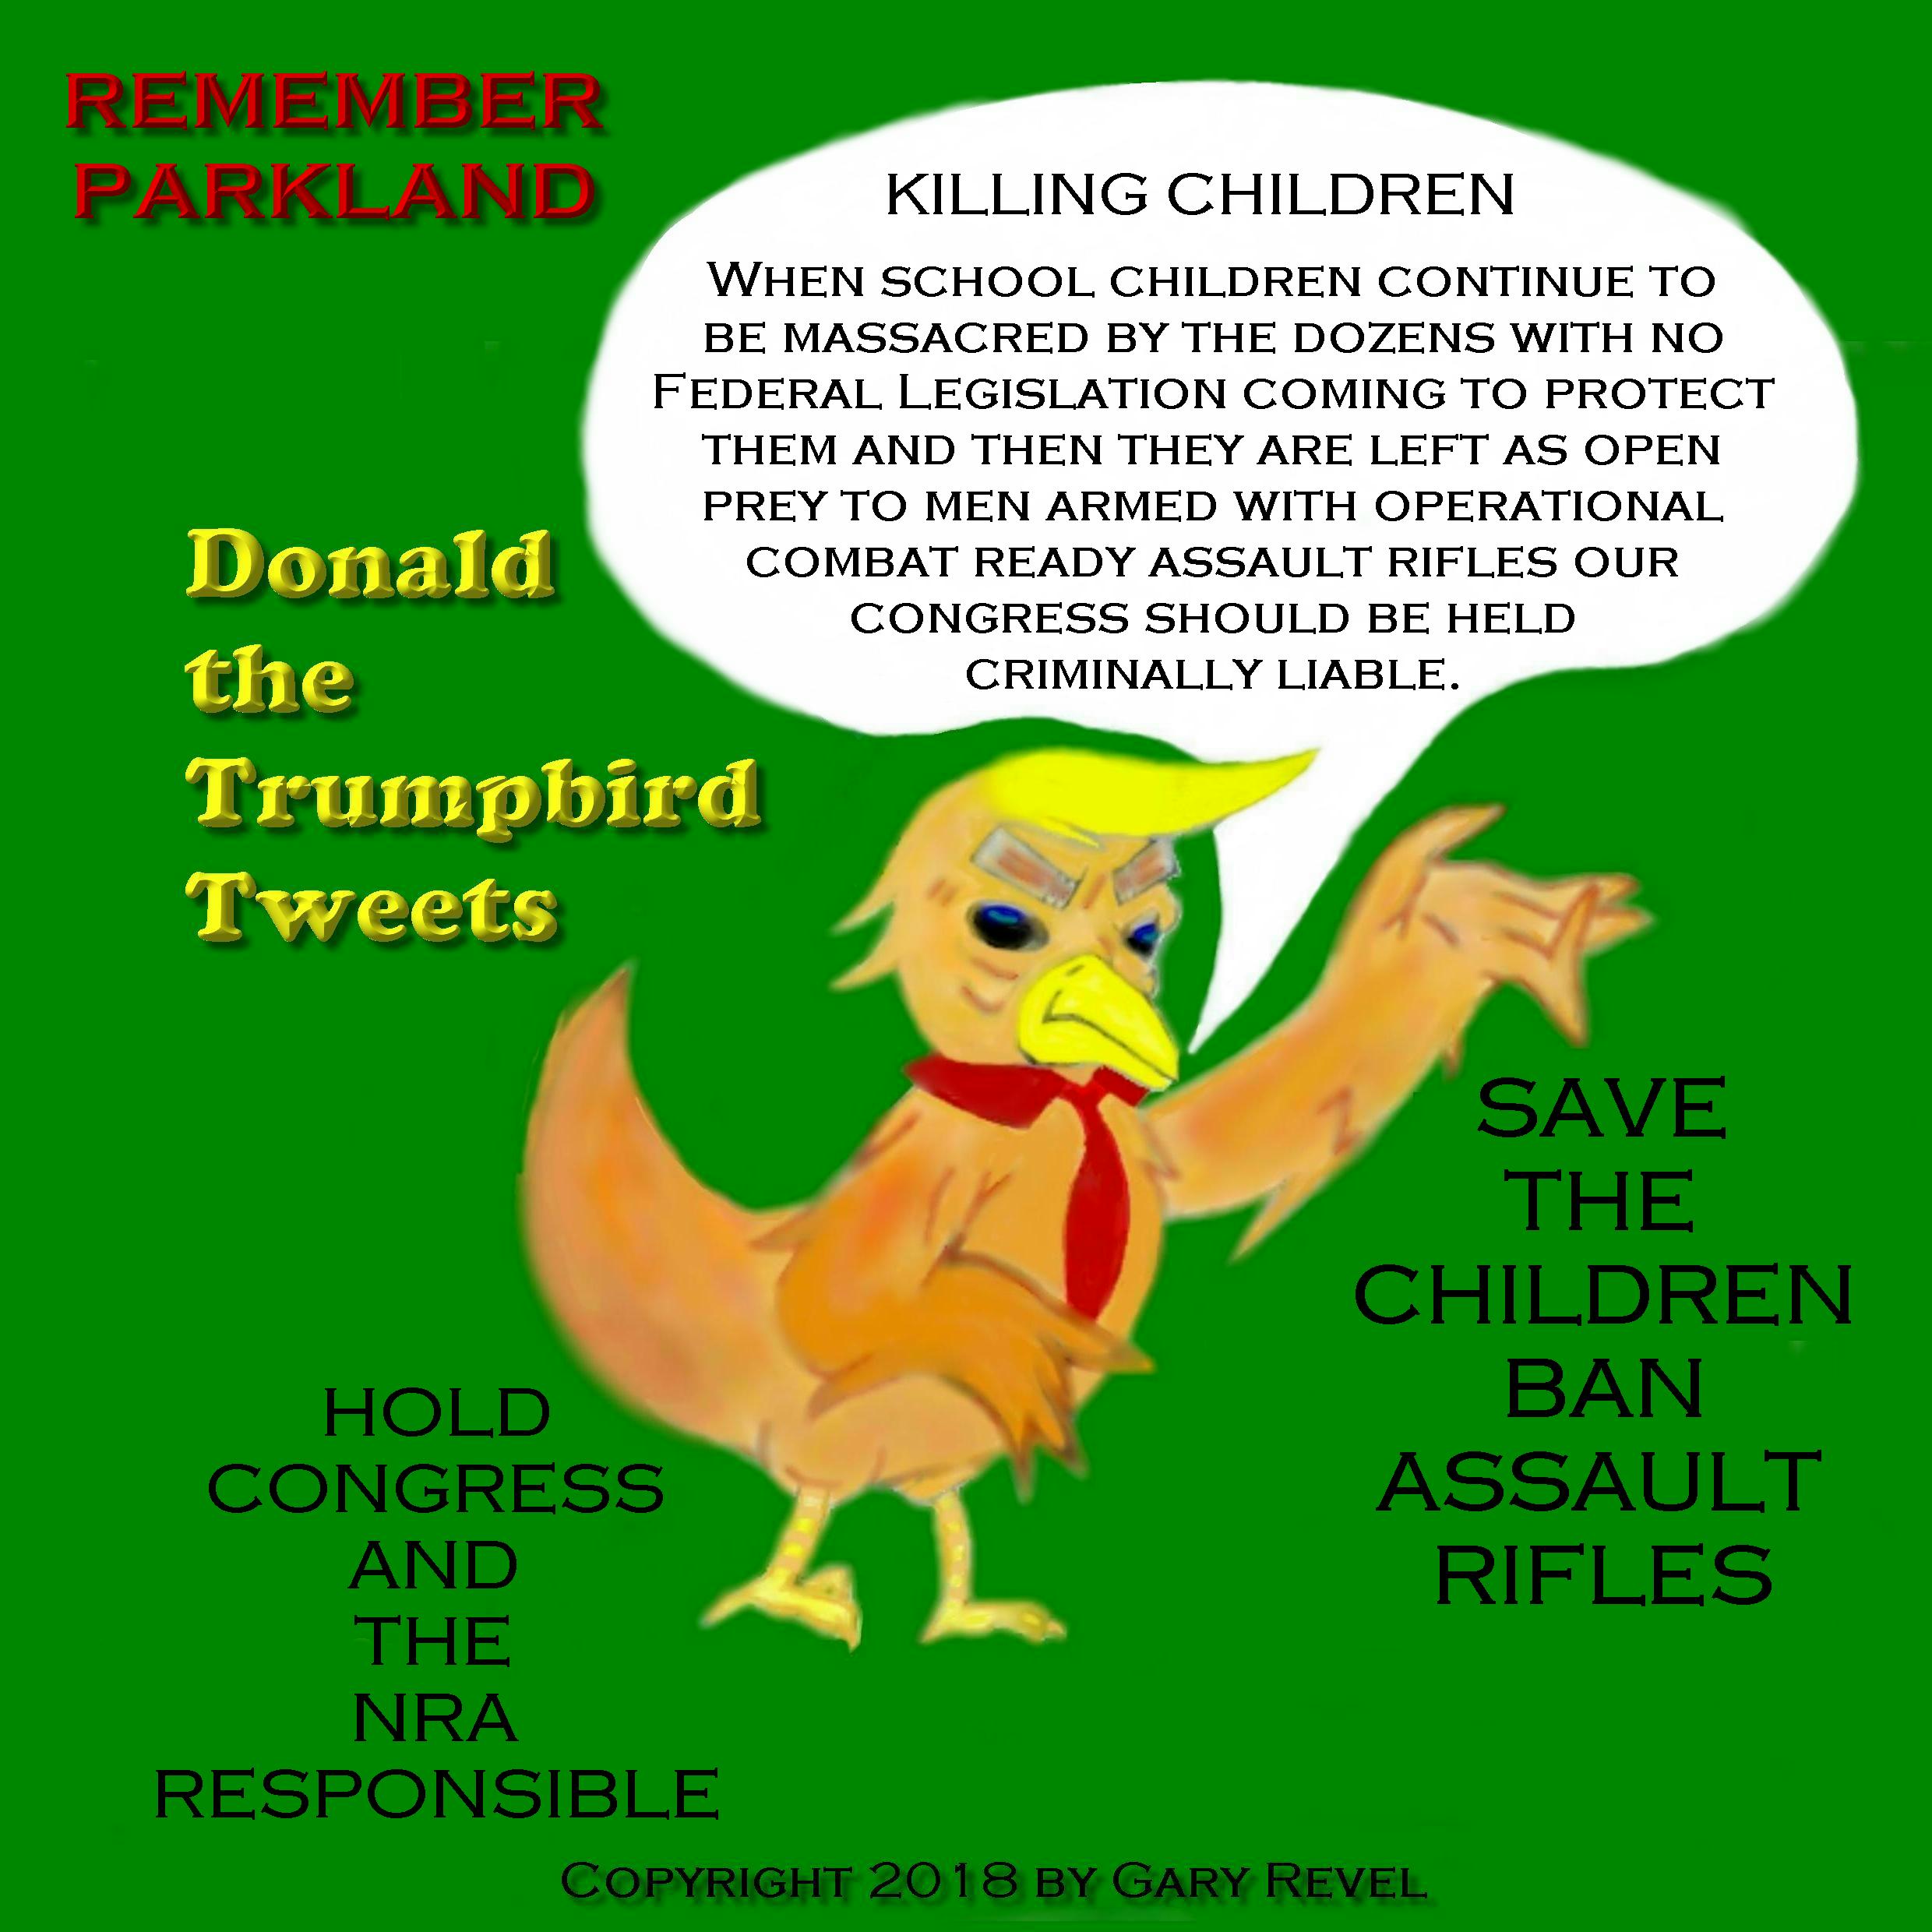 Donald the Trumpbird tweets killing children congress criminally liable